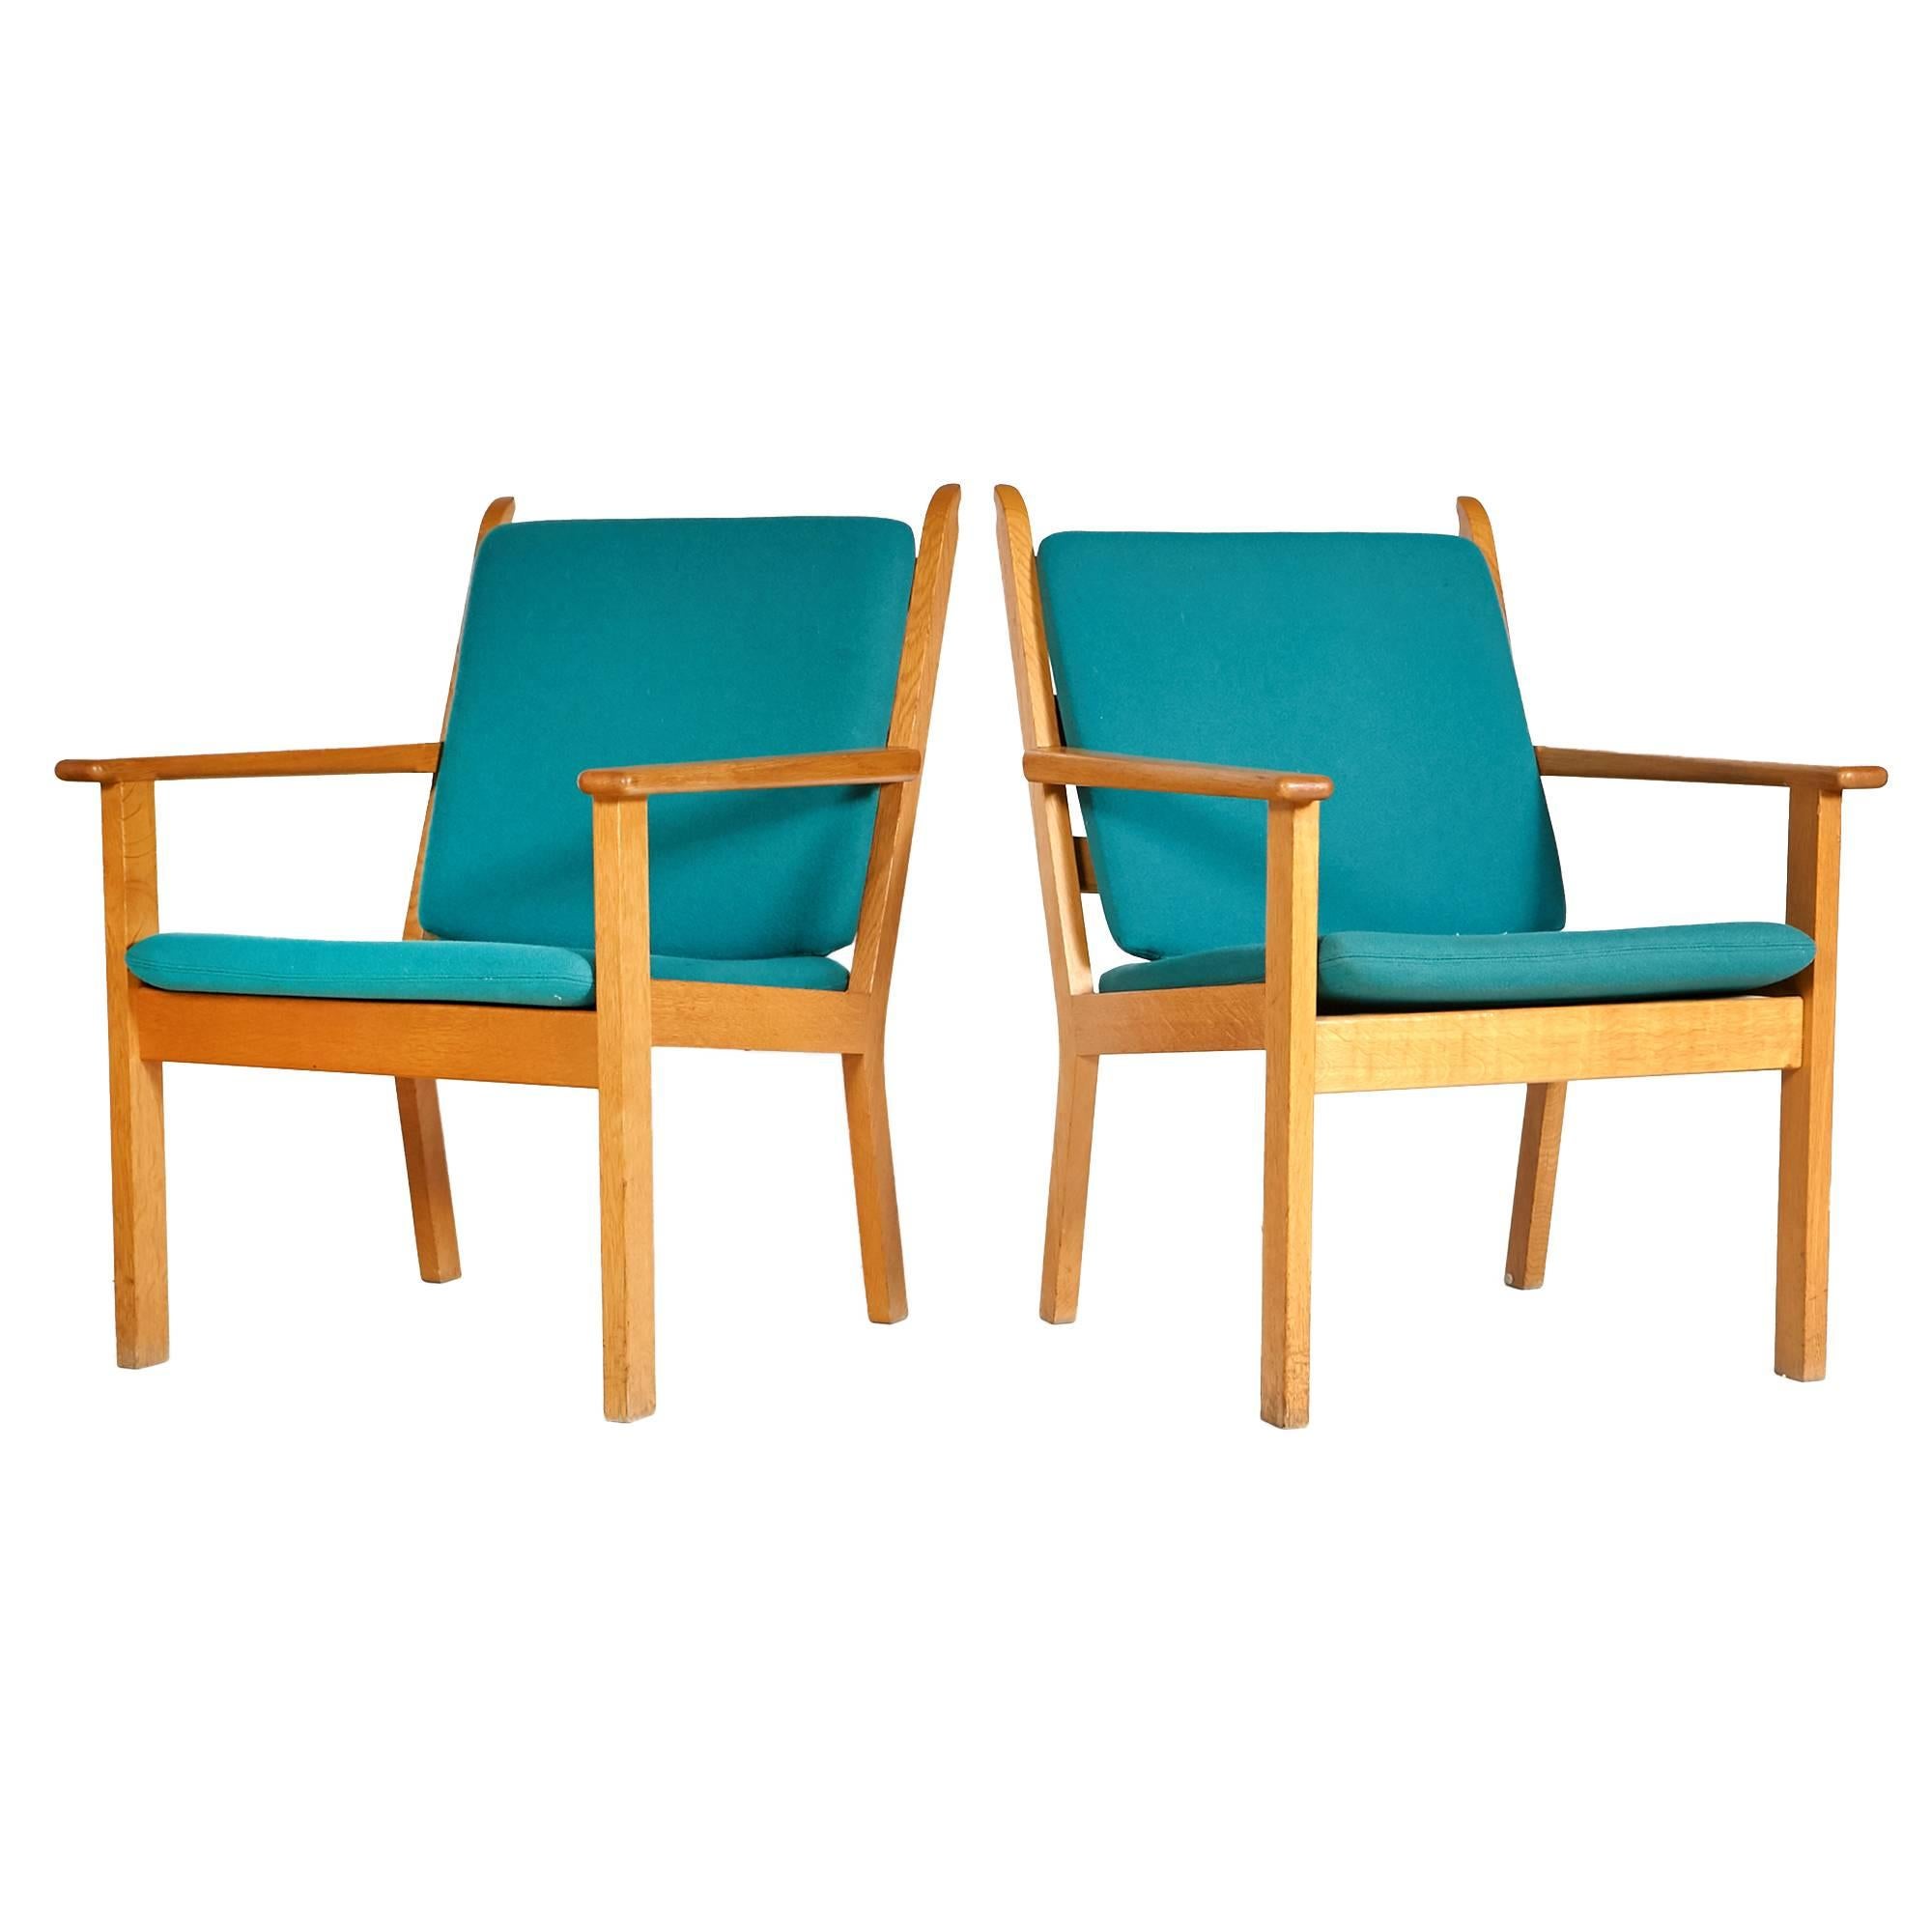 20th Century Hans J. Wegner Oak Lounge Chairs by GETAMA, Pair